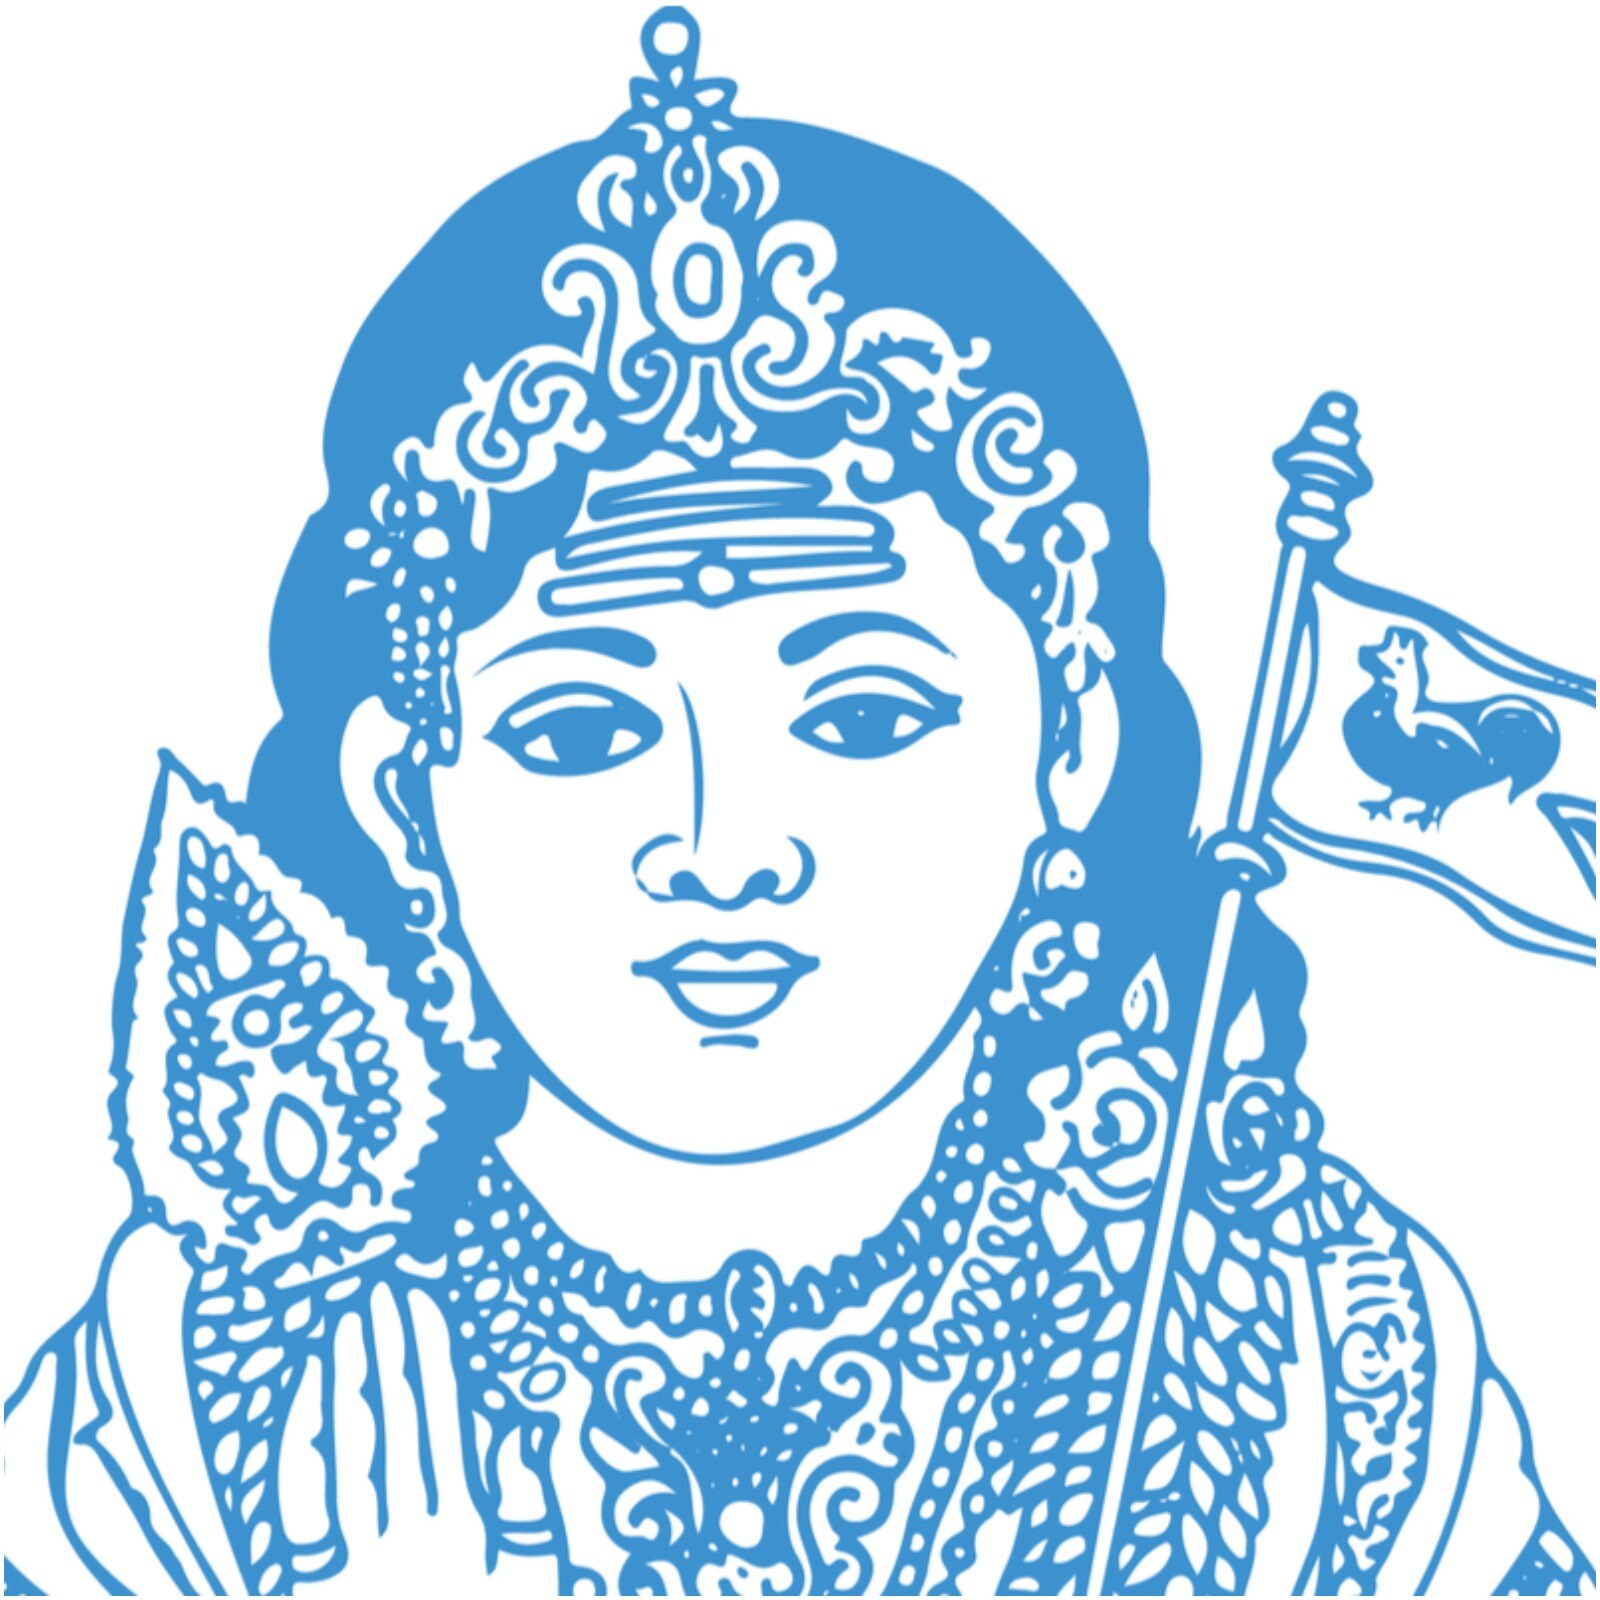 Murugan Sami, Vector Line Drawing Illustration, AI, Cdr, Dxf, Eps, Pdf  Vector Files for Laser Engraving, Muruga, Kumara, Kartikeya, Skanda - Etsy